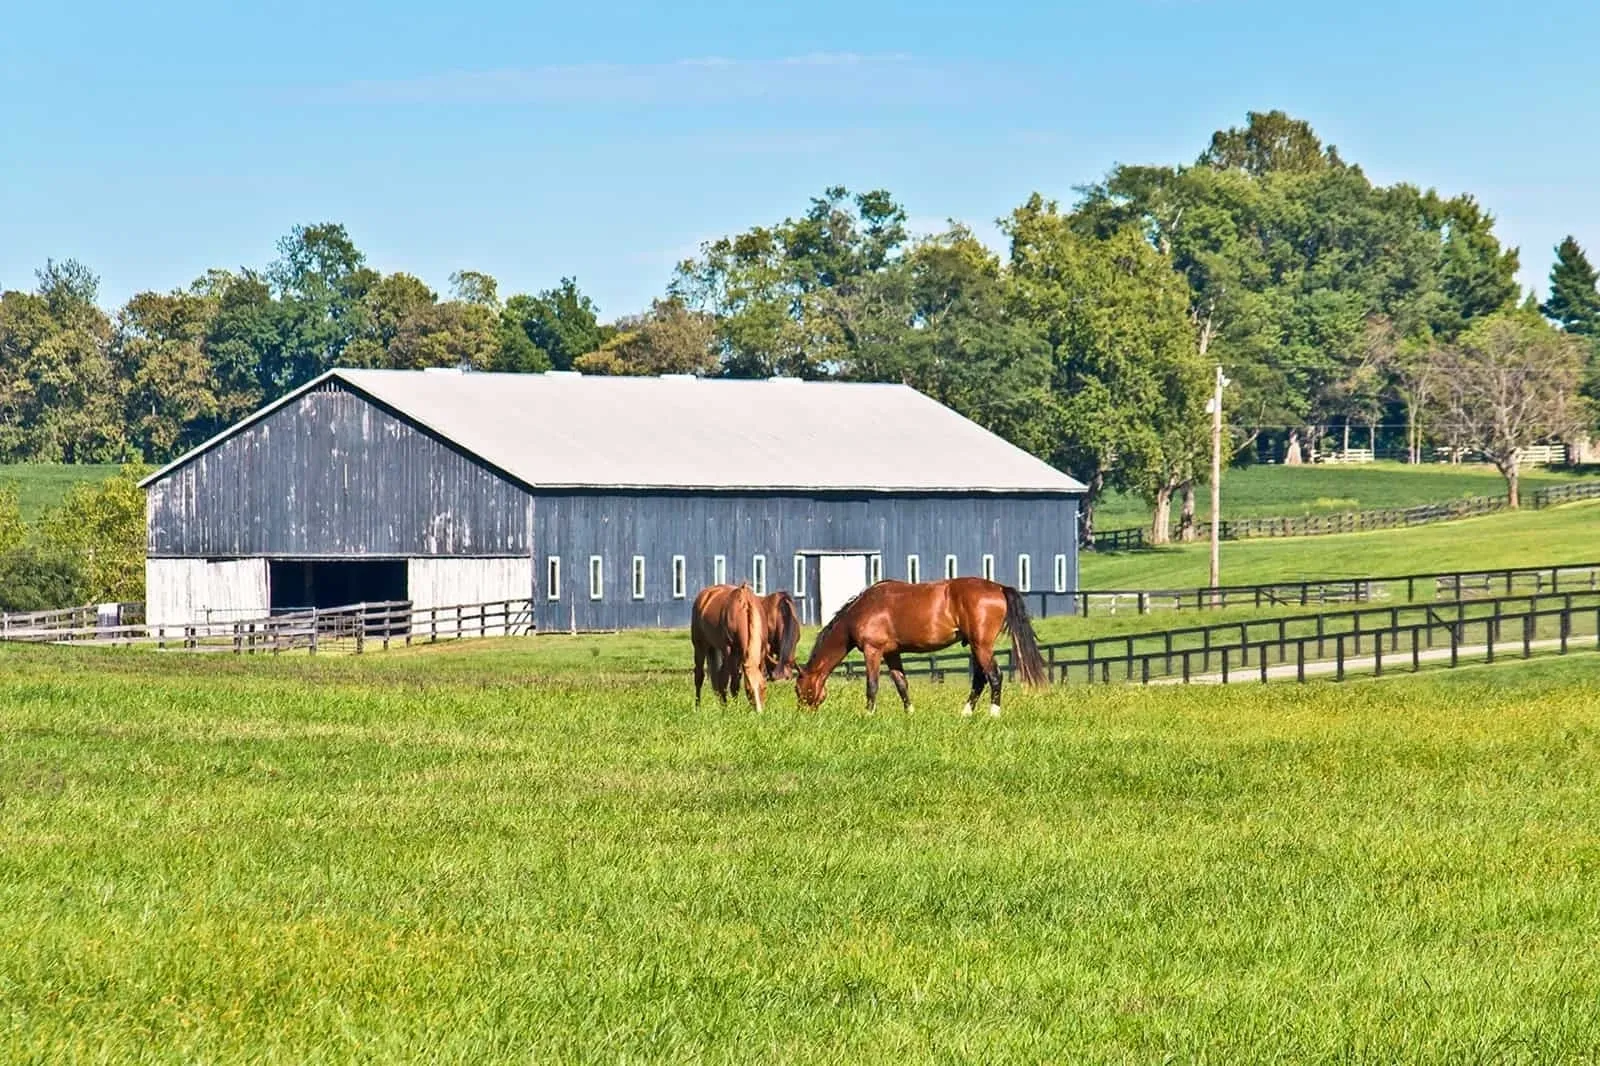 Two horses grazing in a field near a barn.